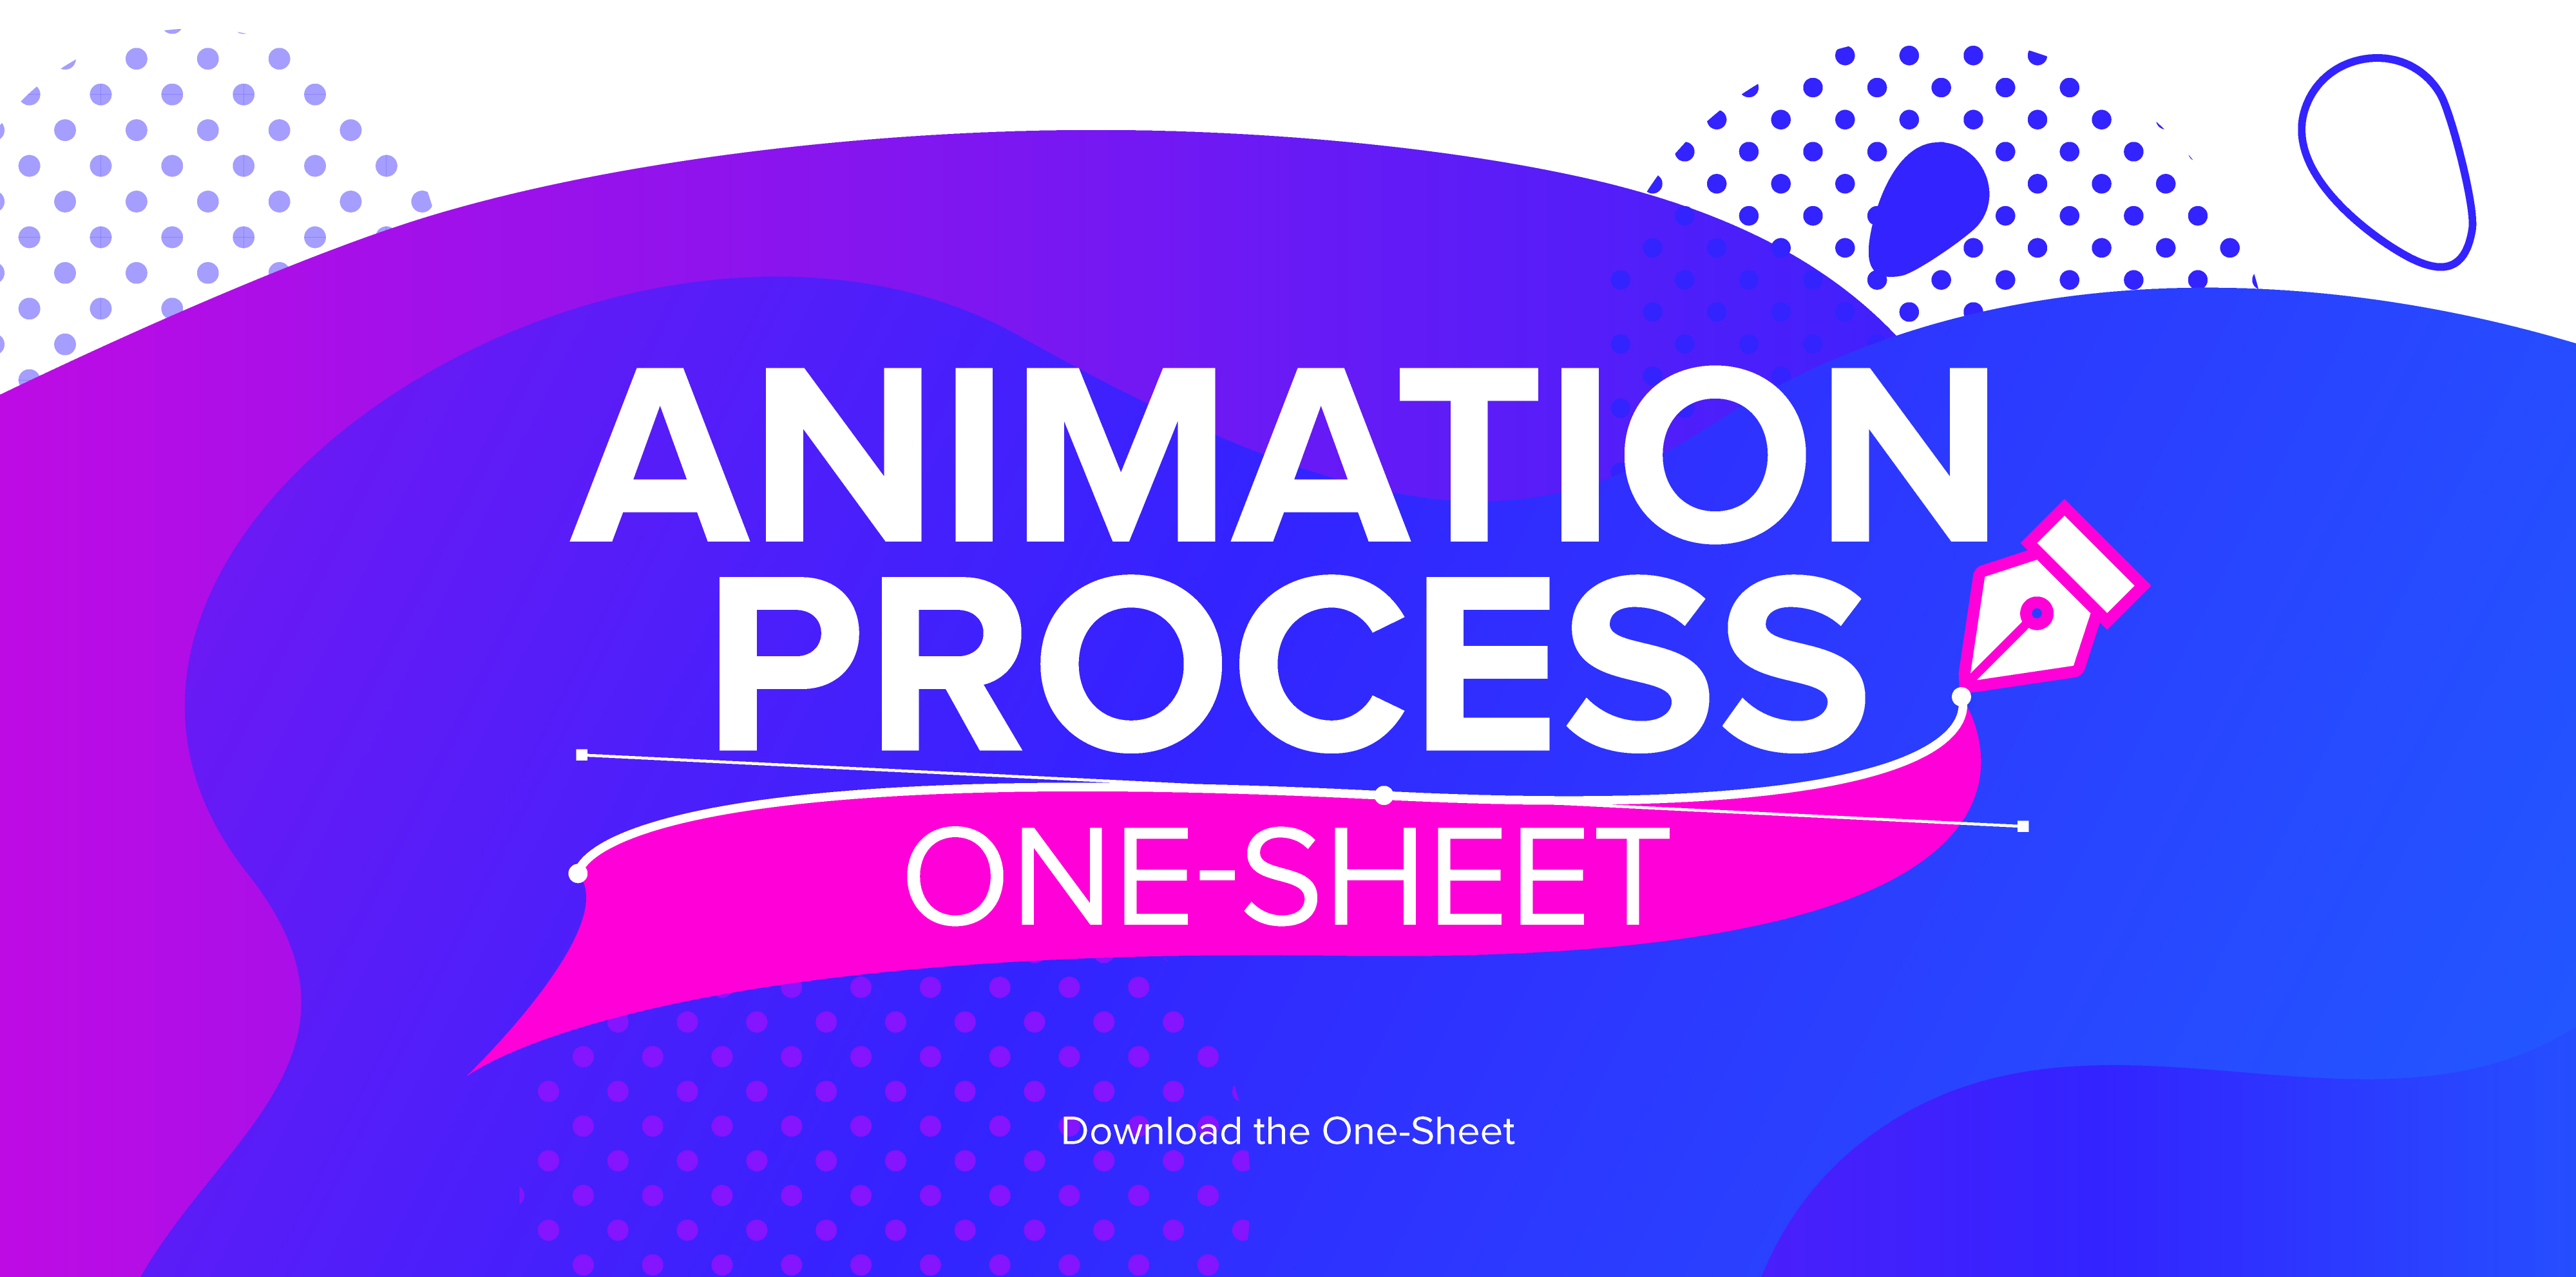 Animation process one-sheet